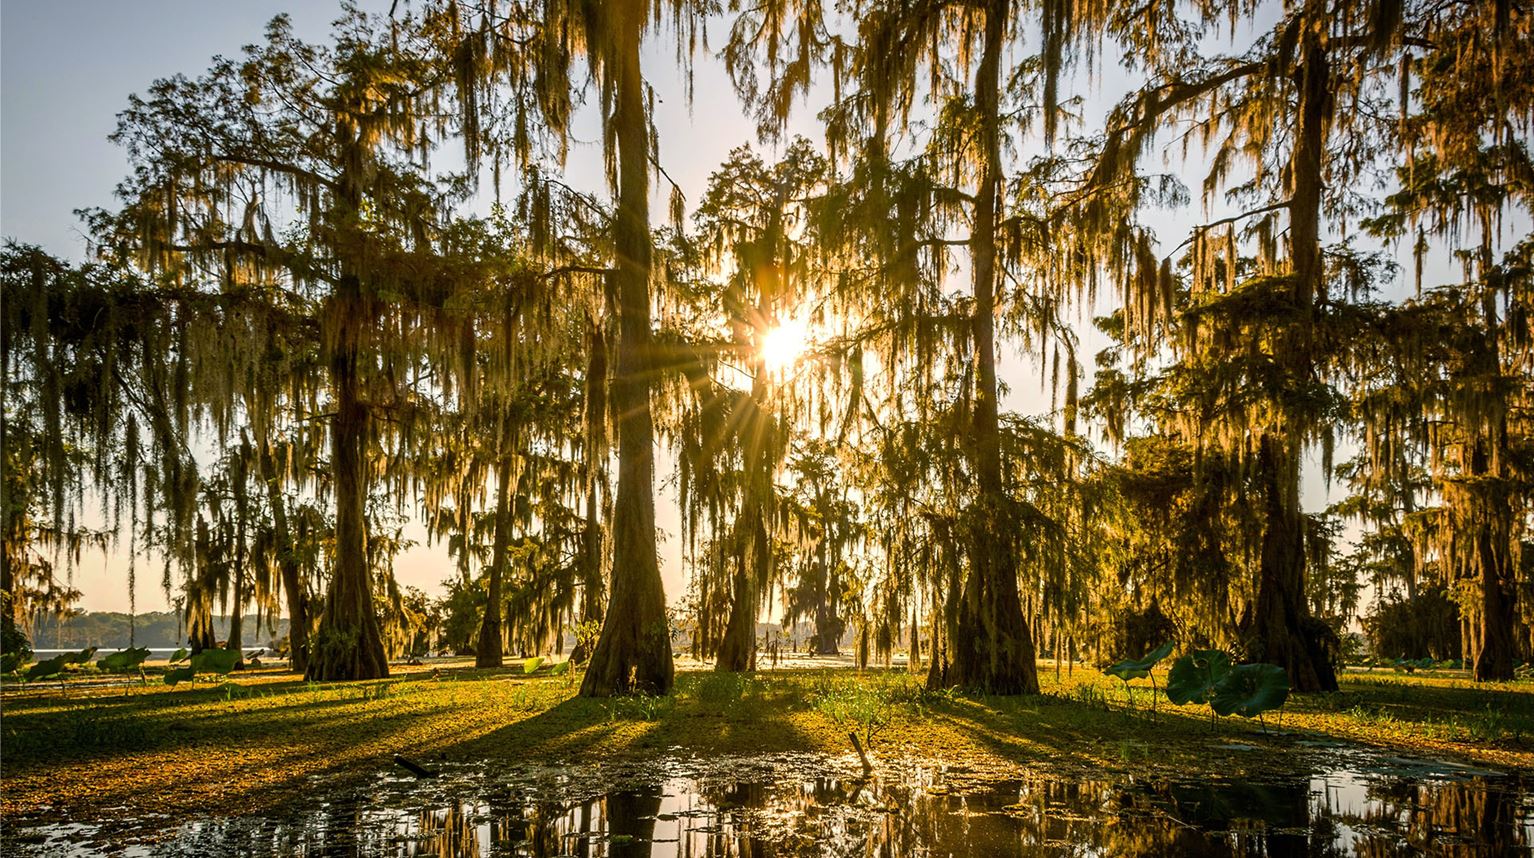 Tall trees with warm sunlight, Louisiana Bayou, New Orleans, U.S.A.